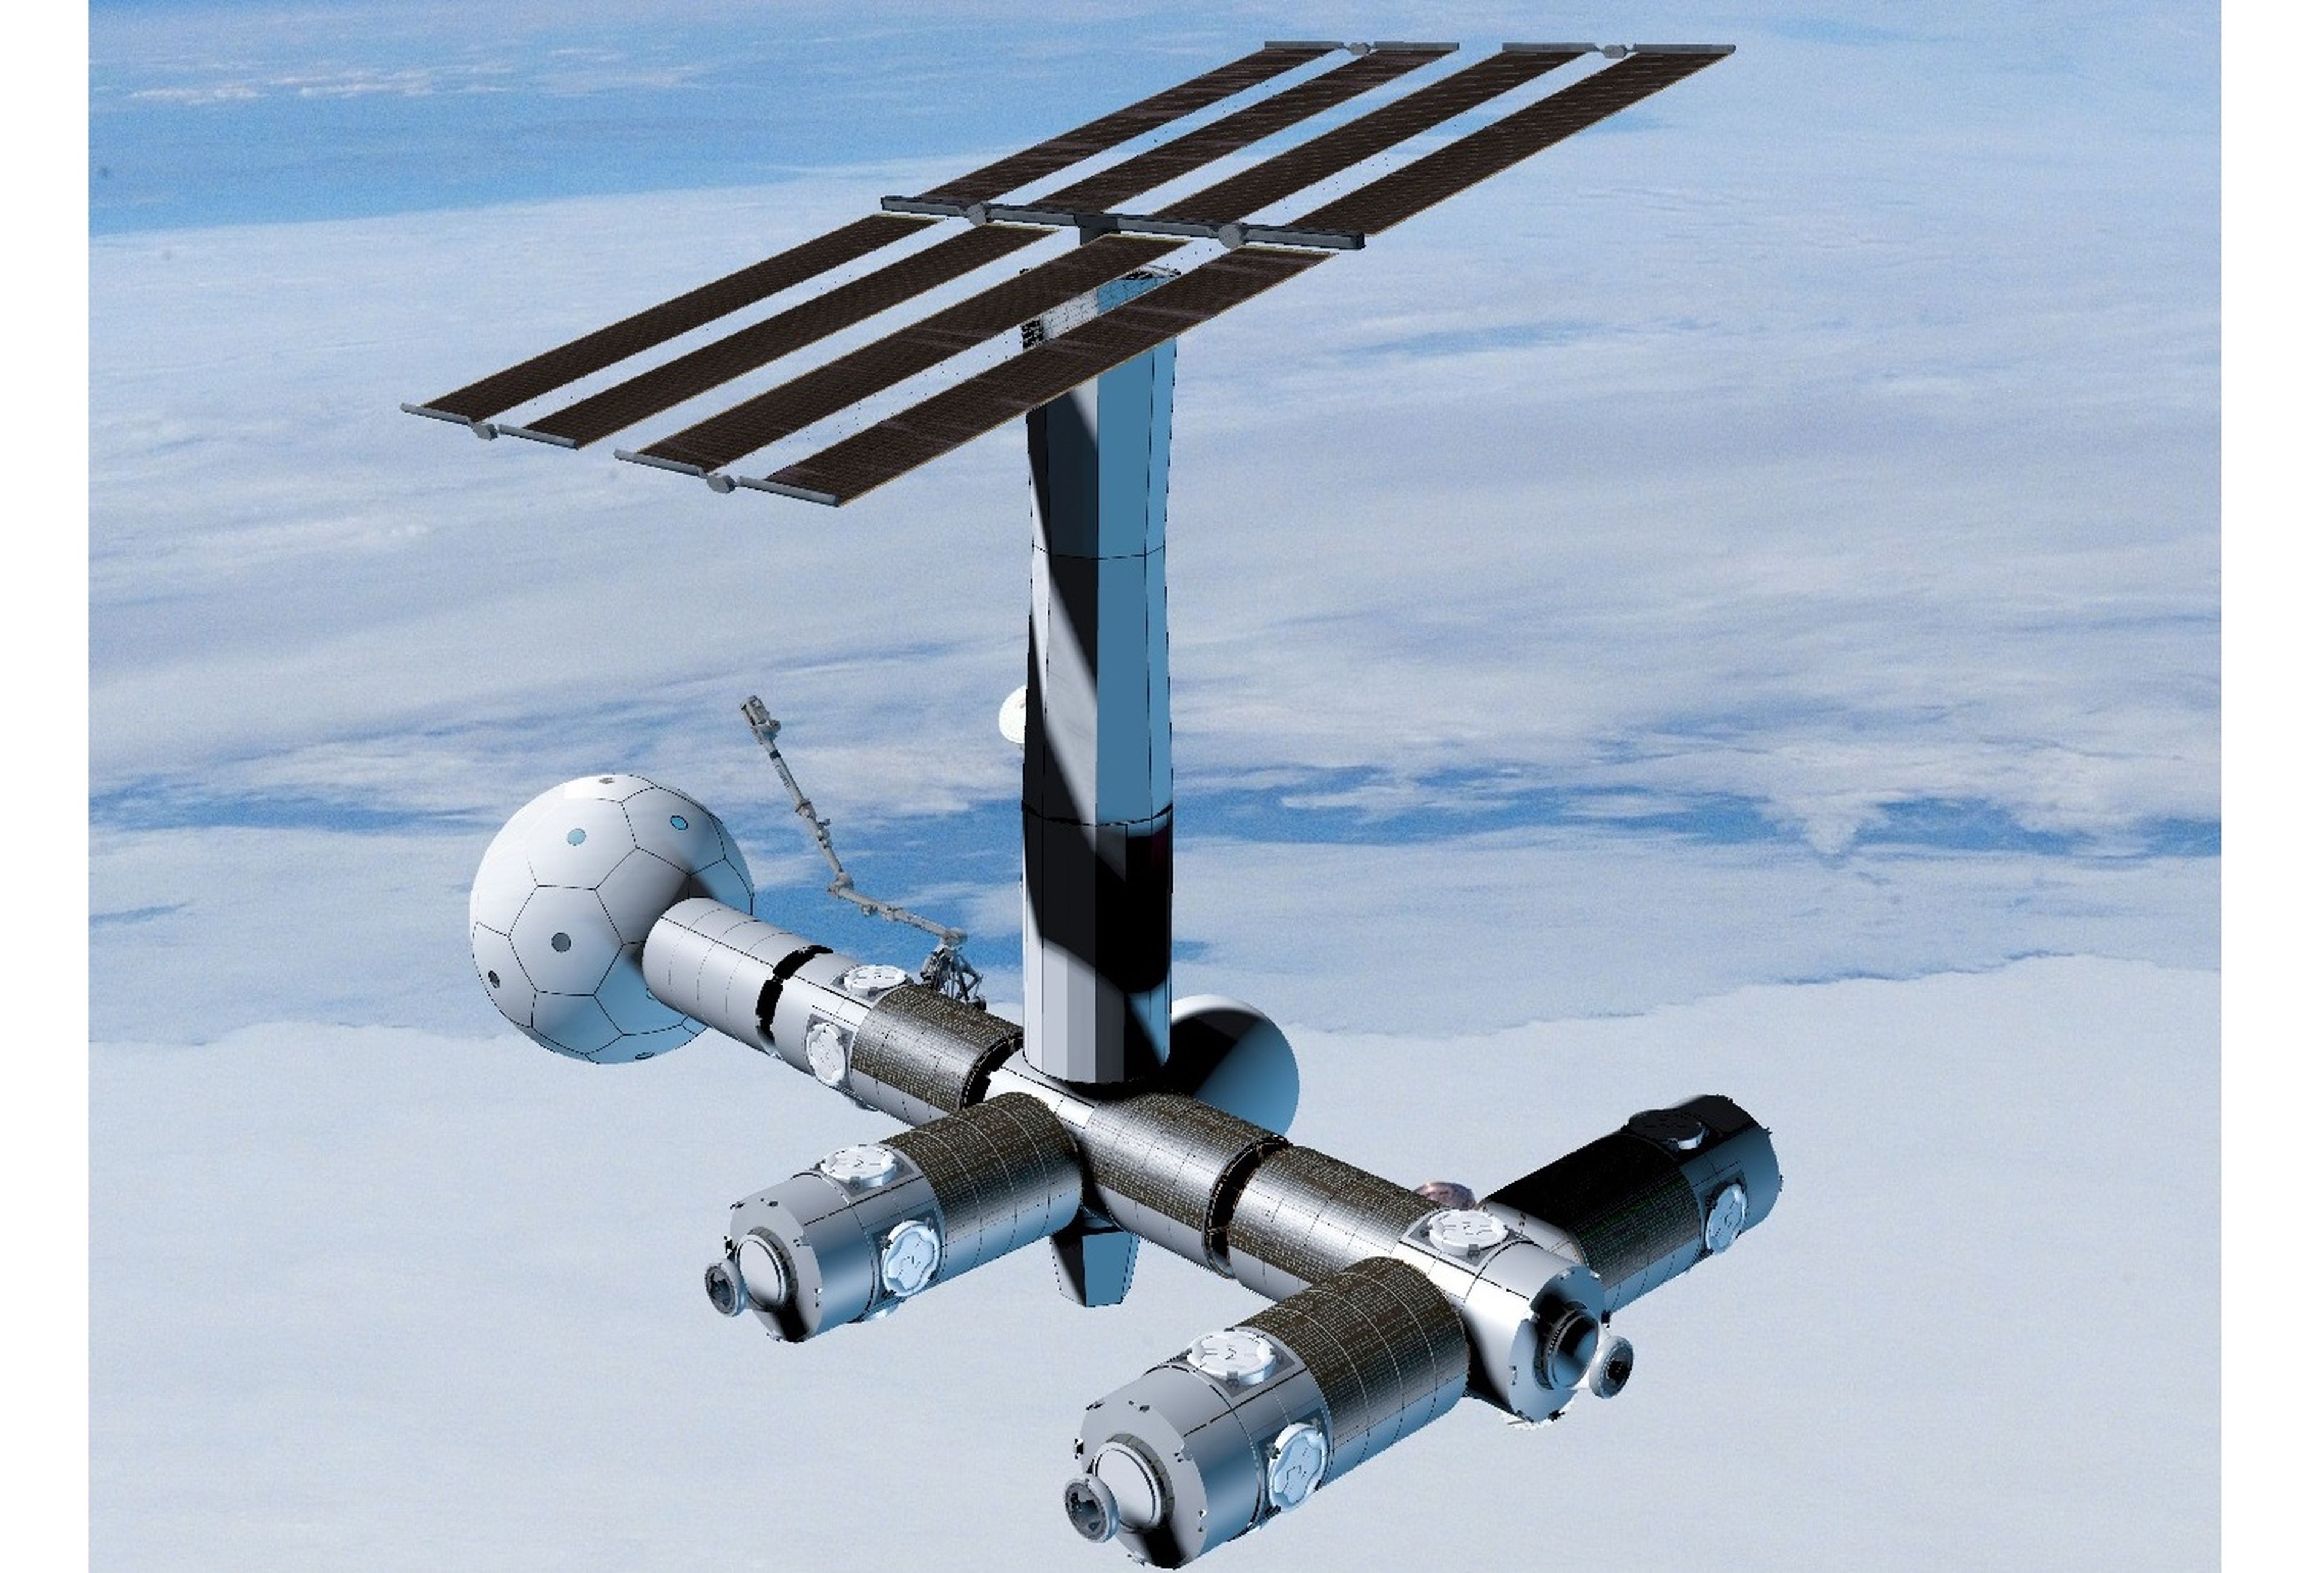 Estacion espacial ThinkPlatform-1